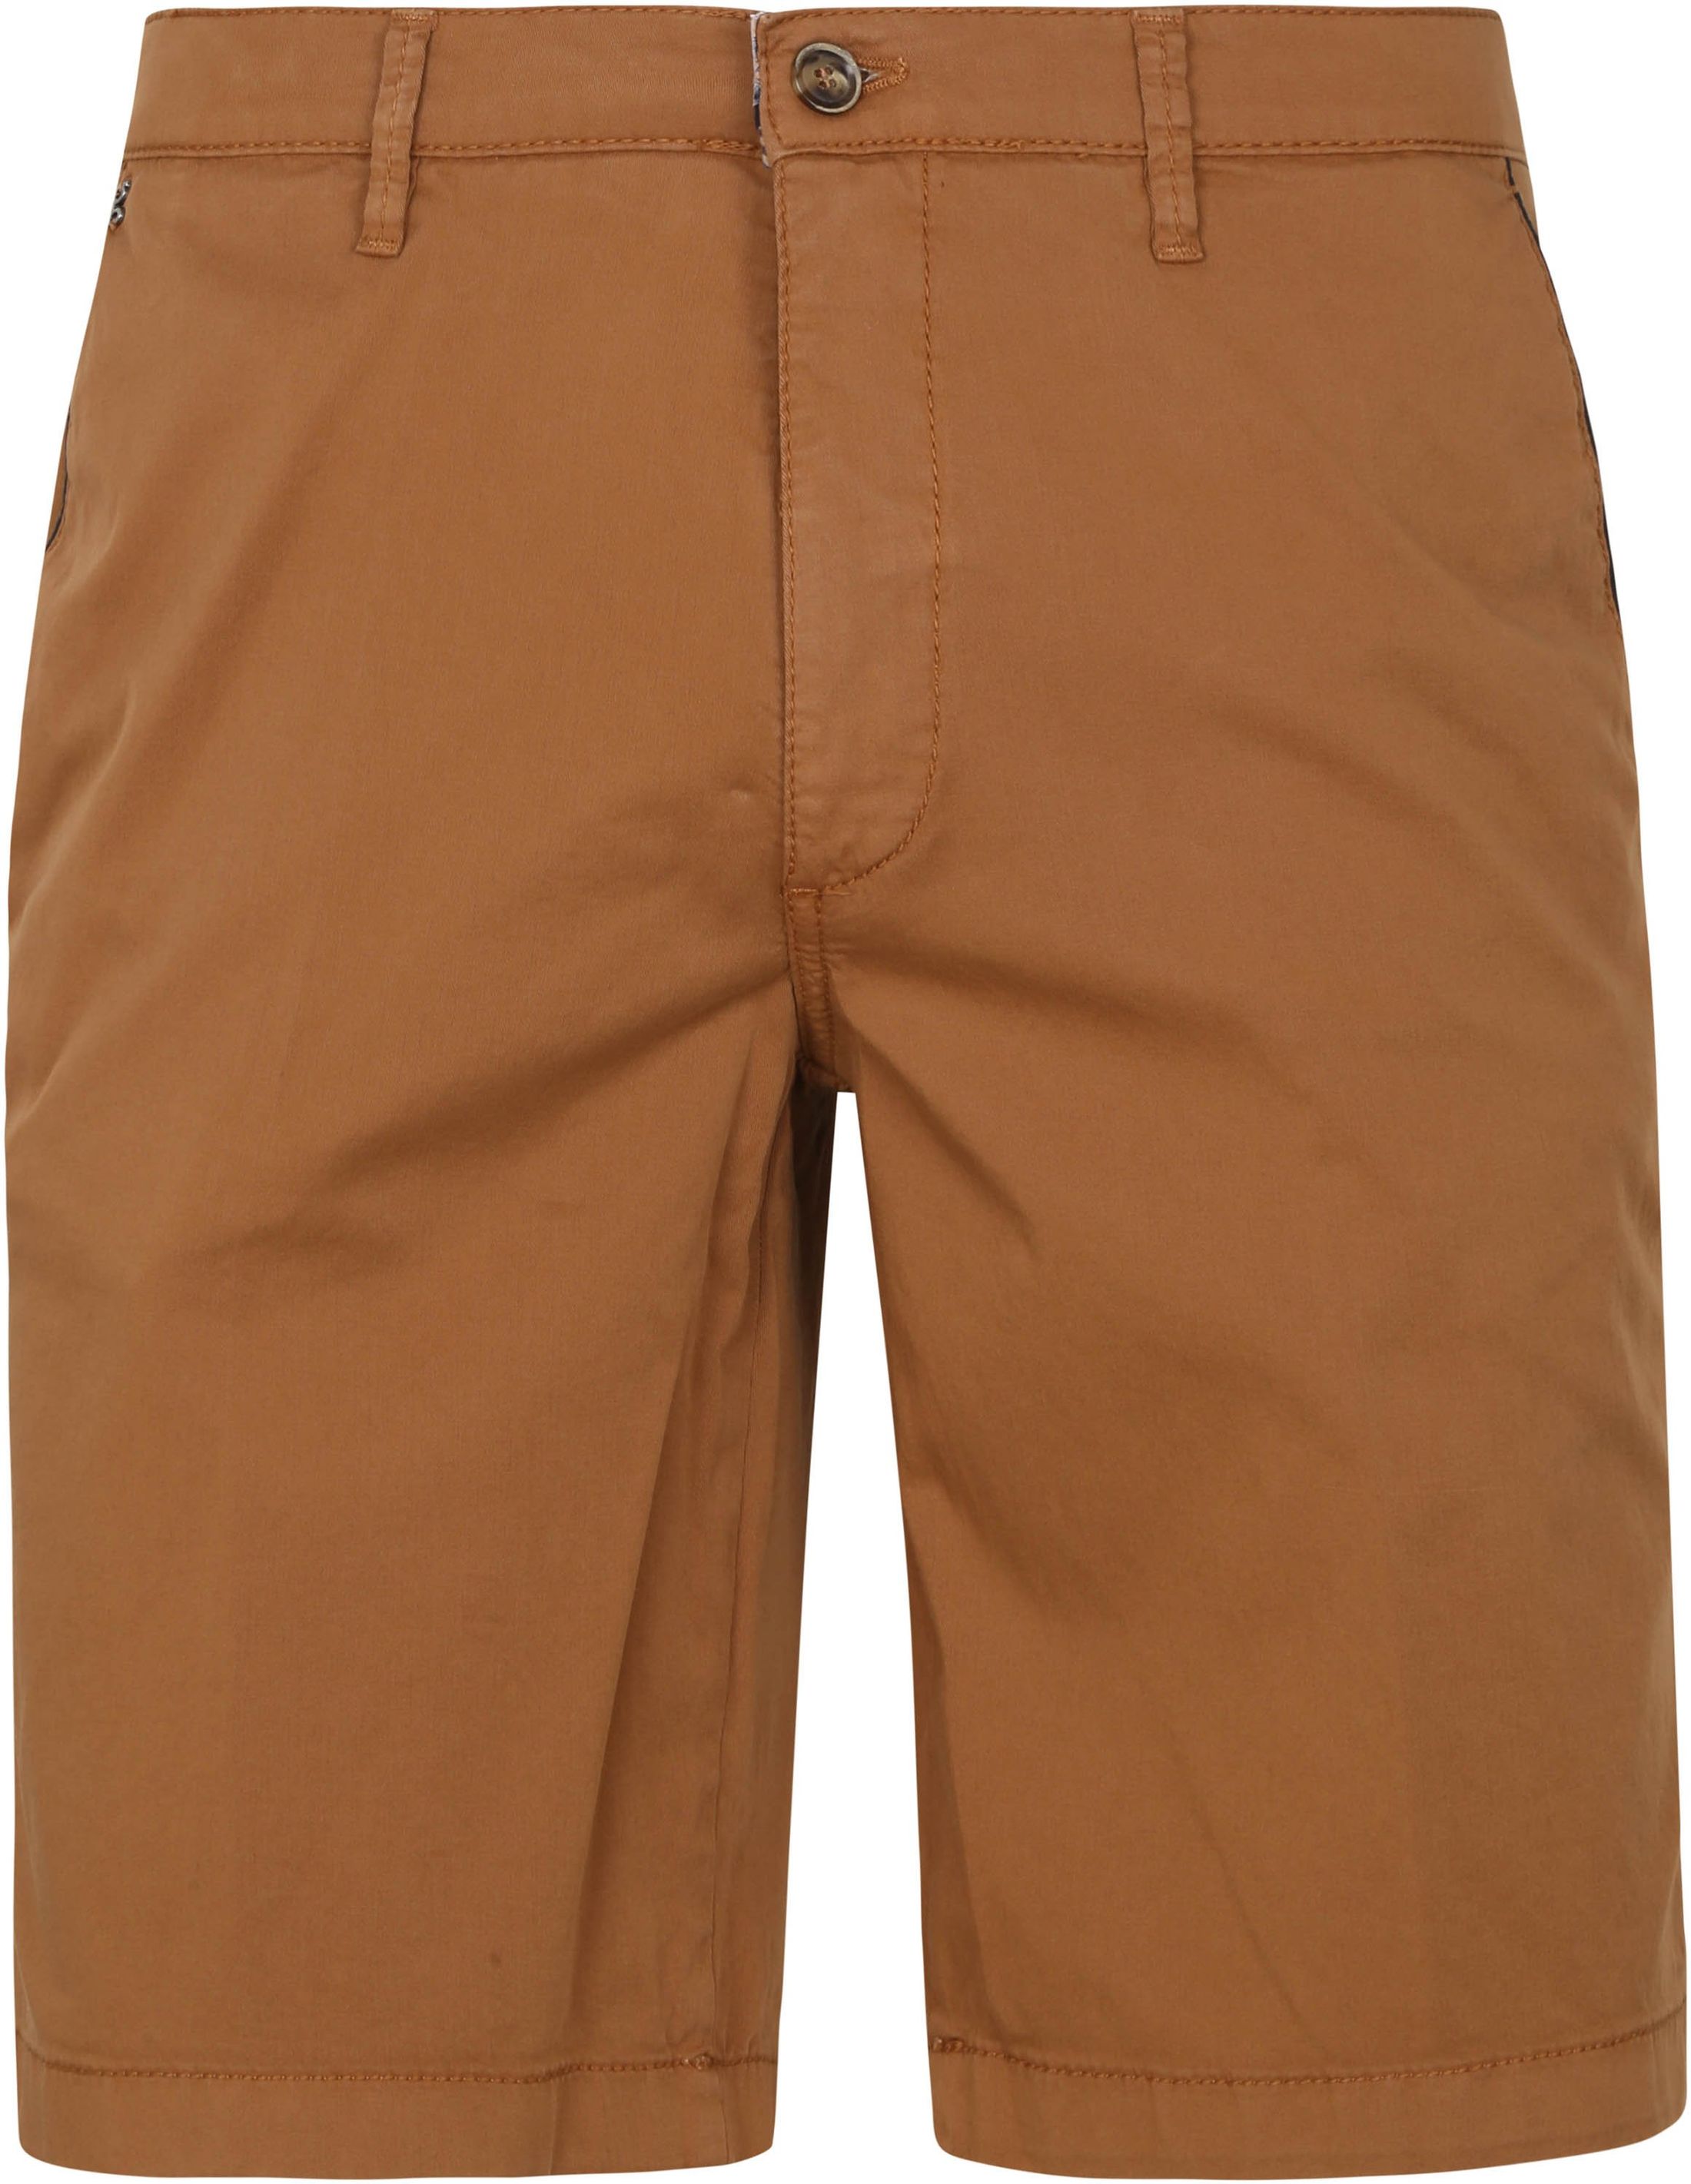 Gardeur Shorts Bermuda Jasper Brown size W 32/33